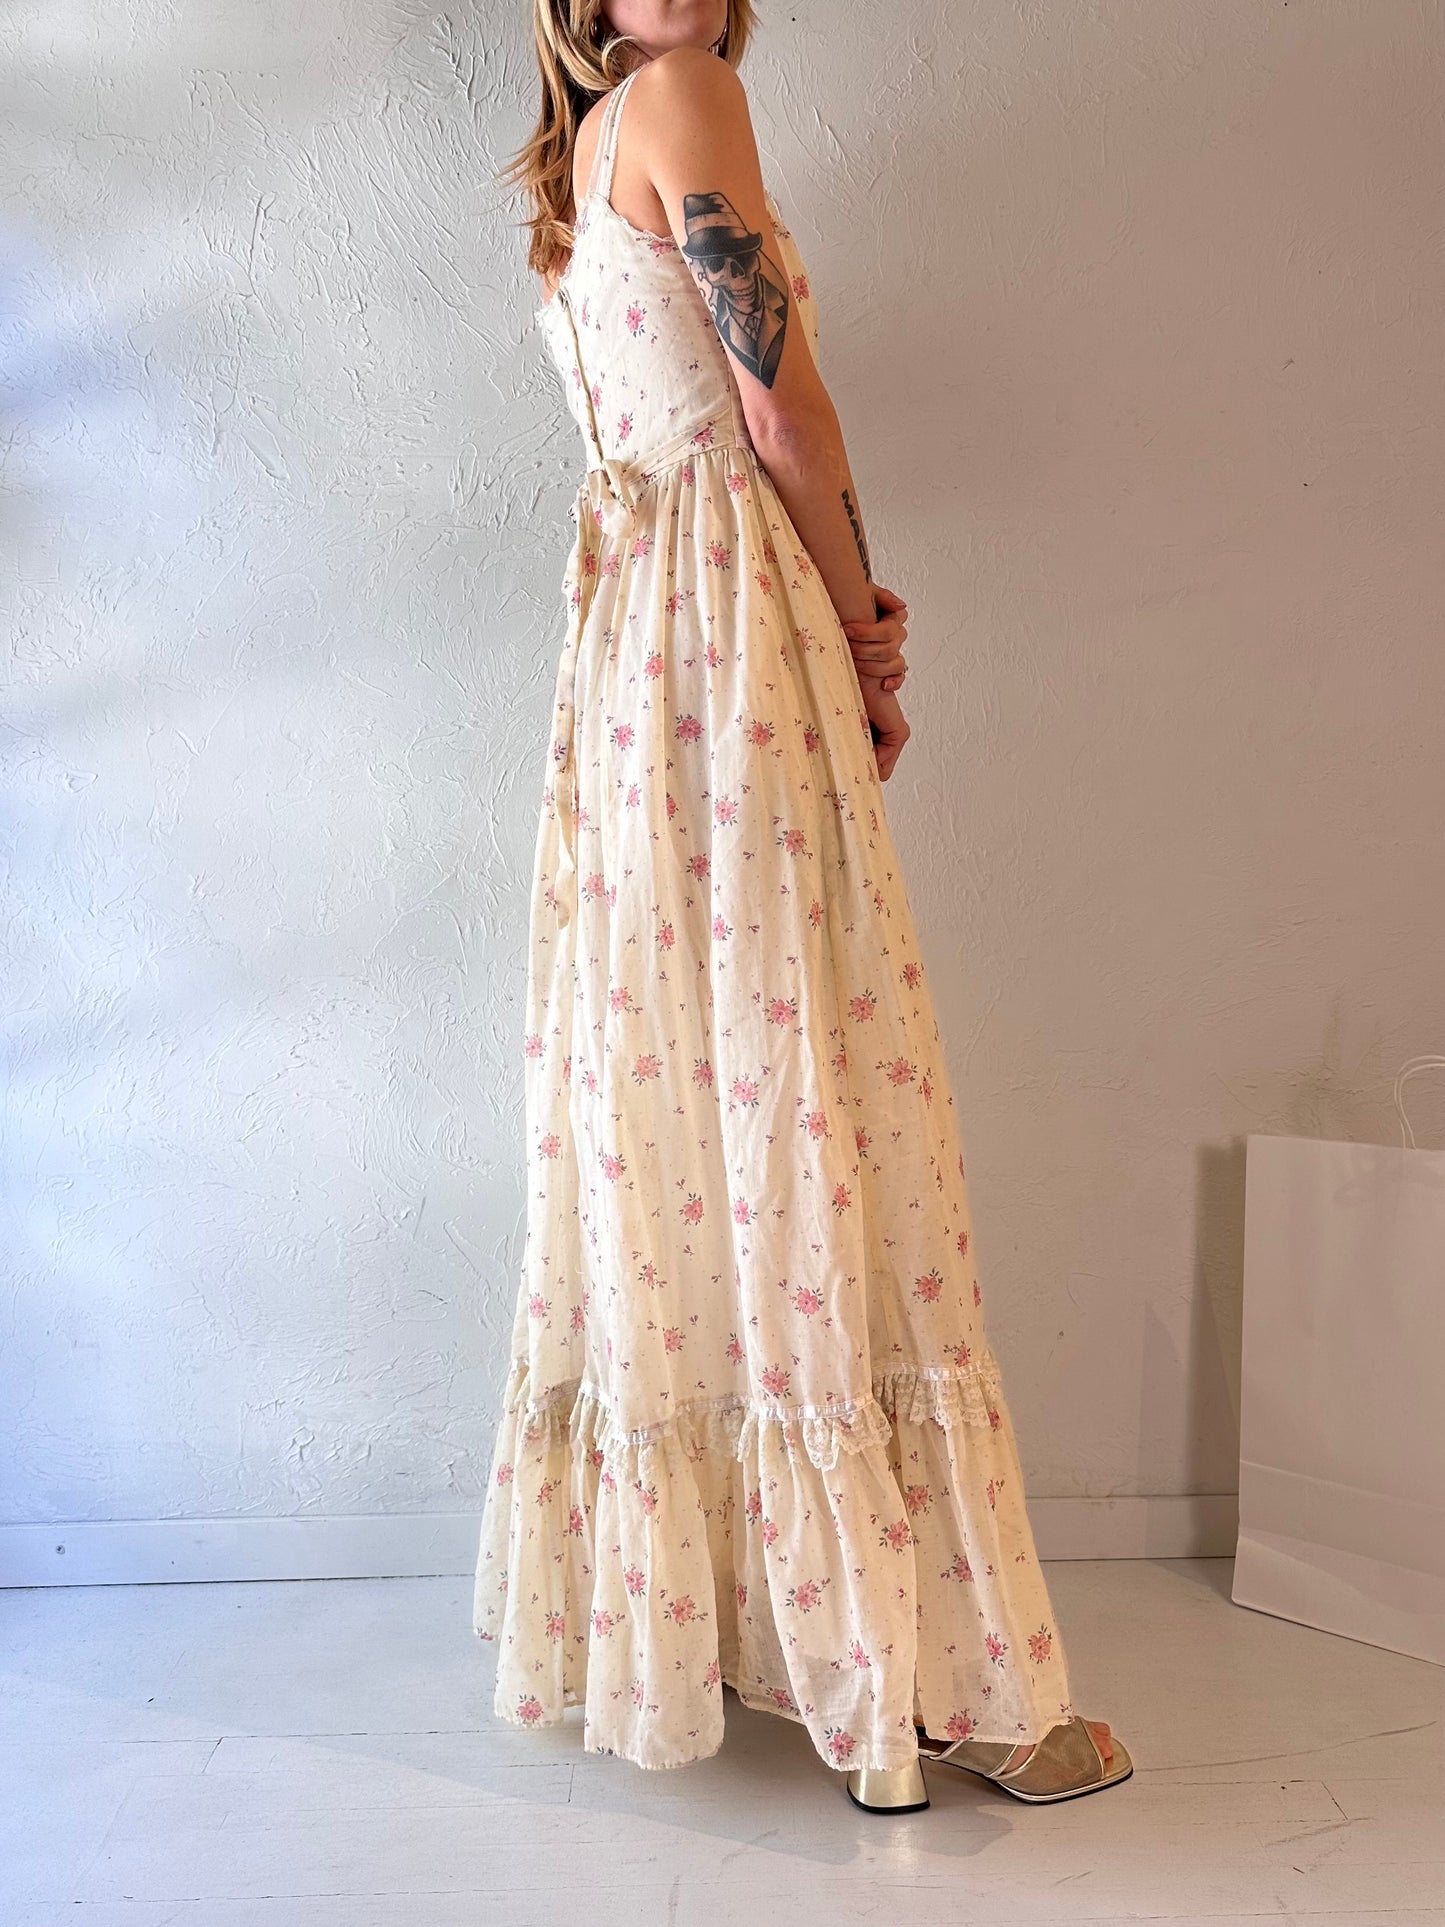 70s 'Gunne Sax' Cream Floral Print Sleeveless Dress / Small